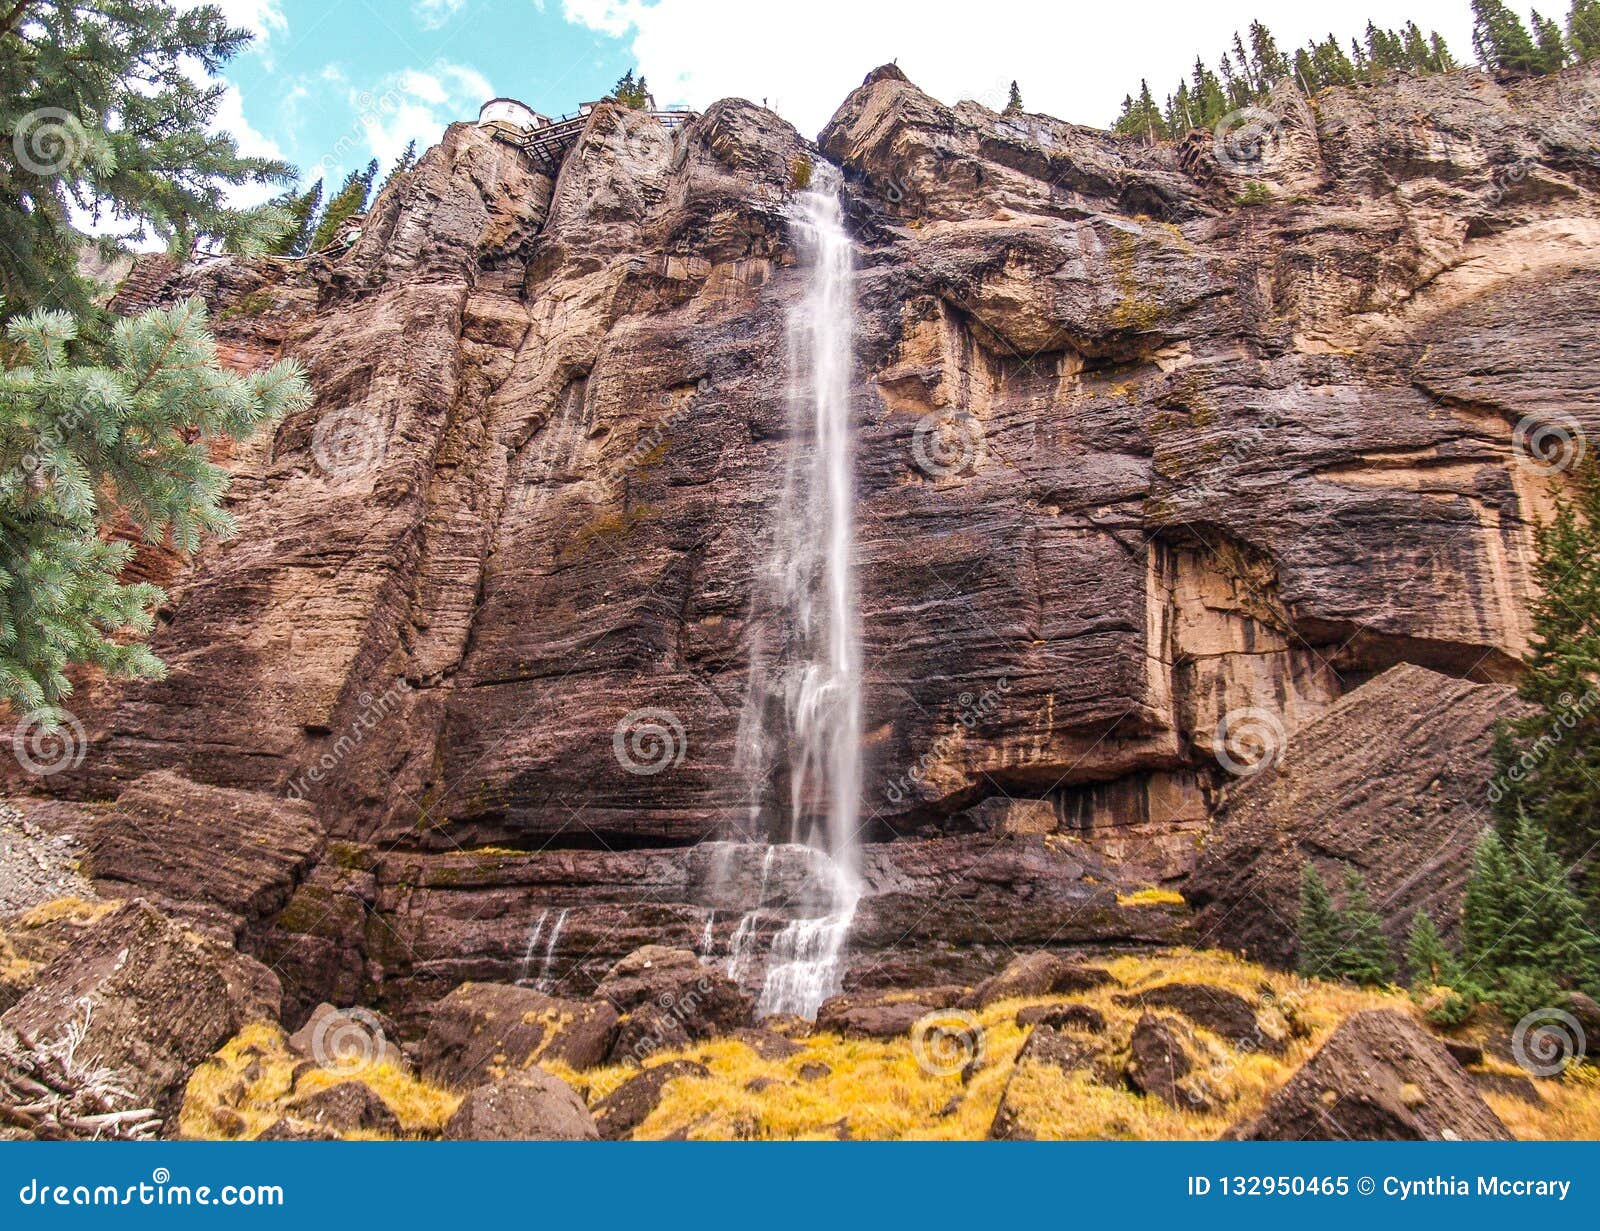 Bridal Veil Falls In Telluride Colorado Stock Image Image Of Hiking Trail